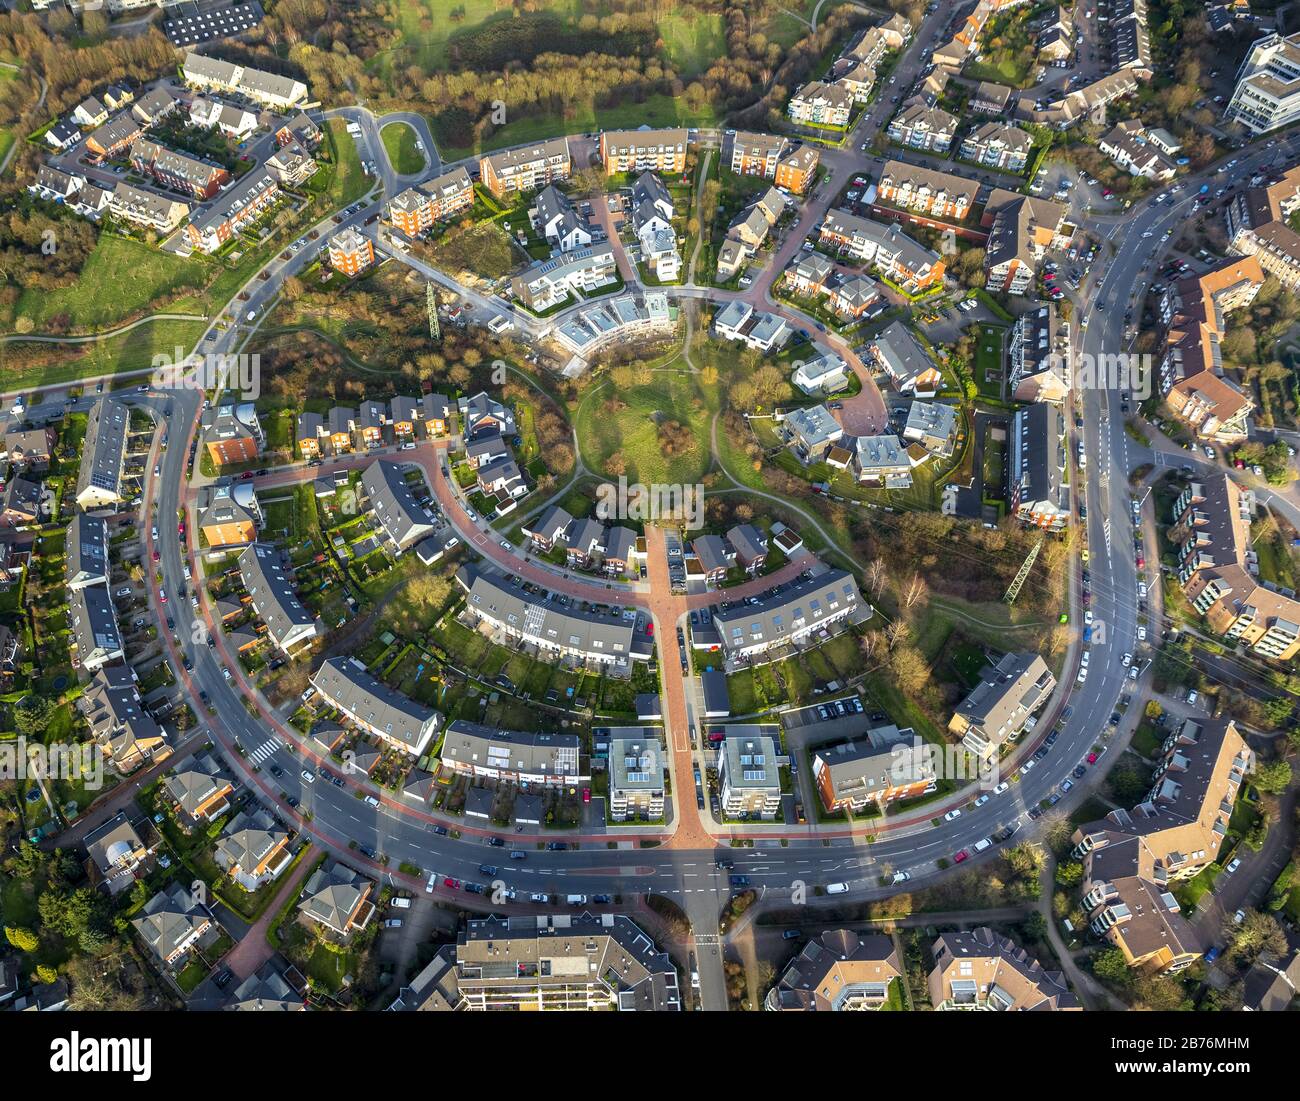 , Residential area in Saarn with concentric development in Muelheim, 24.02.2014, aerial view, Germany, North Rhine-Westphalia, Ruhr Area, Muelheim/Ruhr Stock Photo